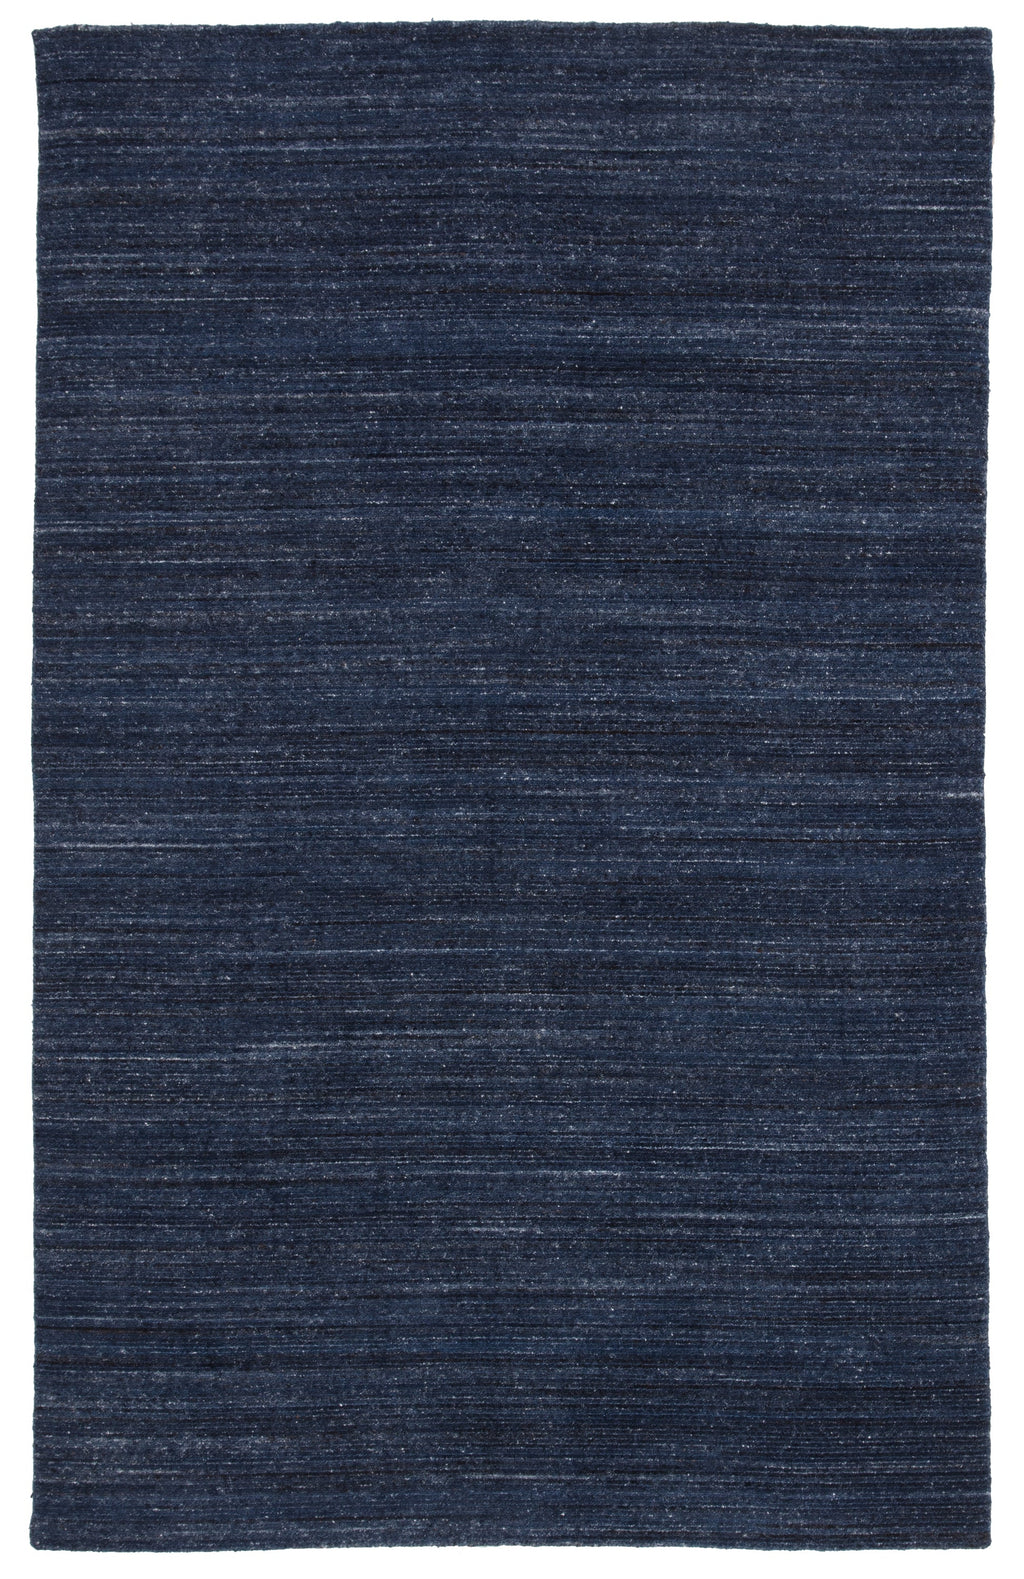 vassa solid rug in blue wing teal sky captain design by jaipur 1